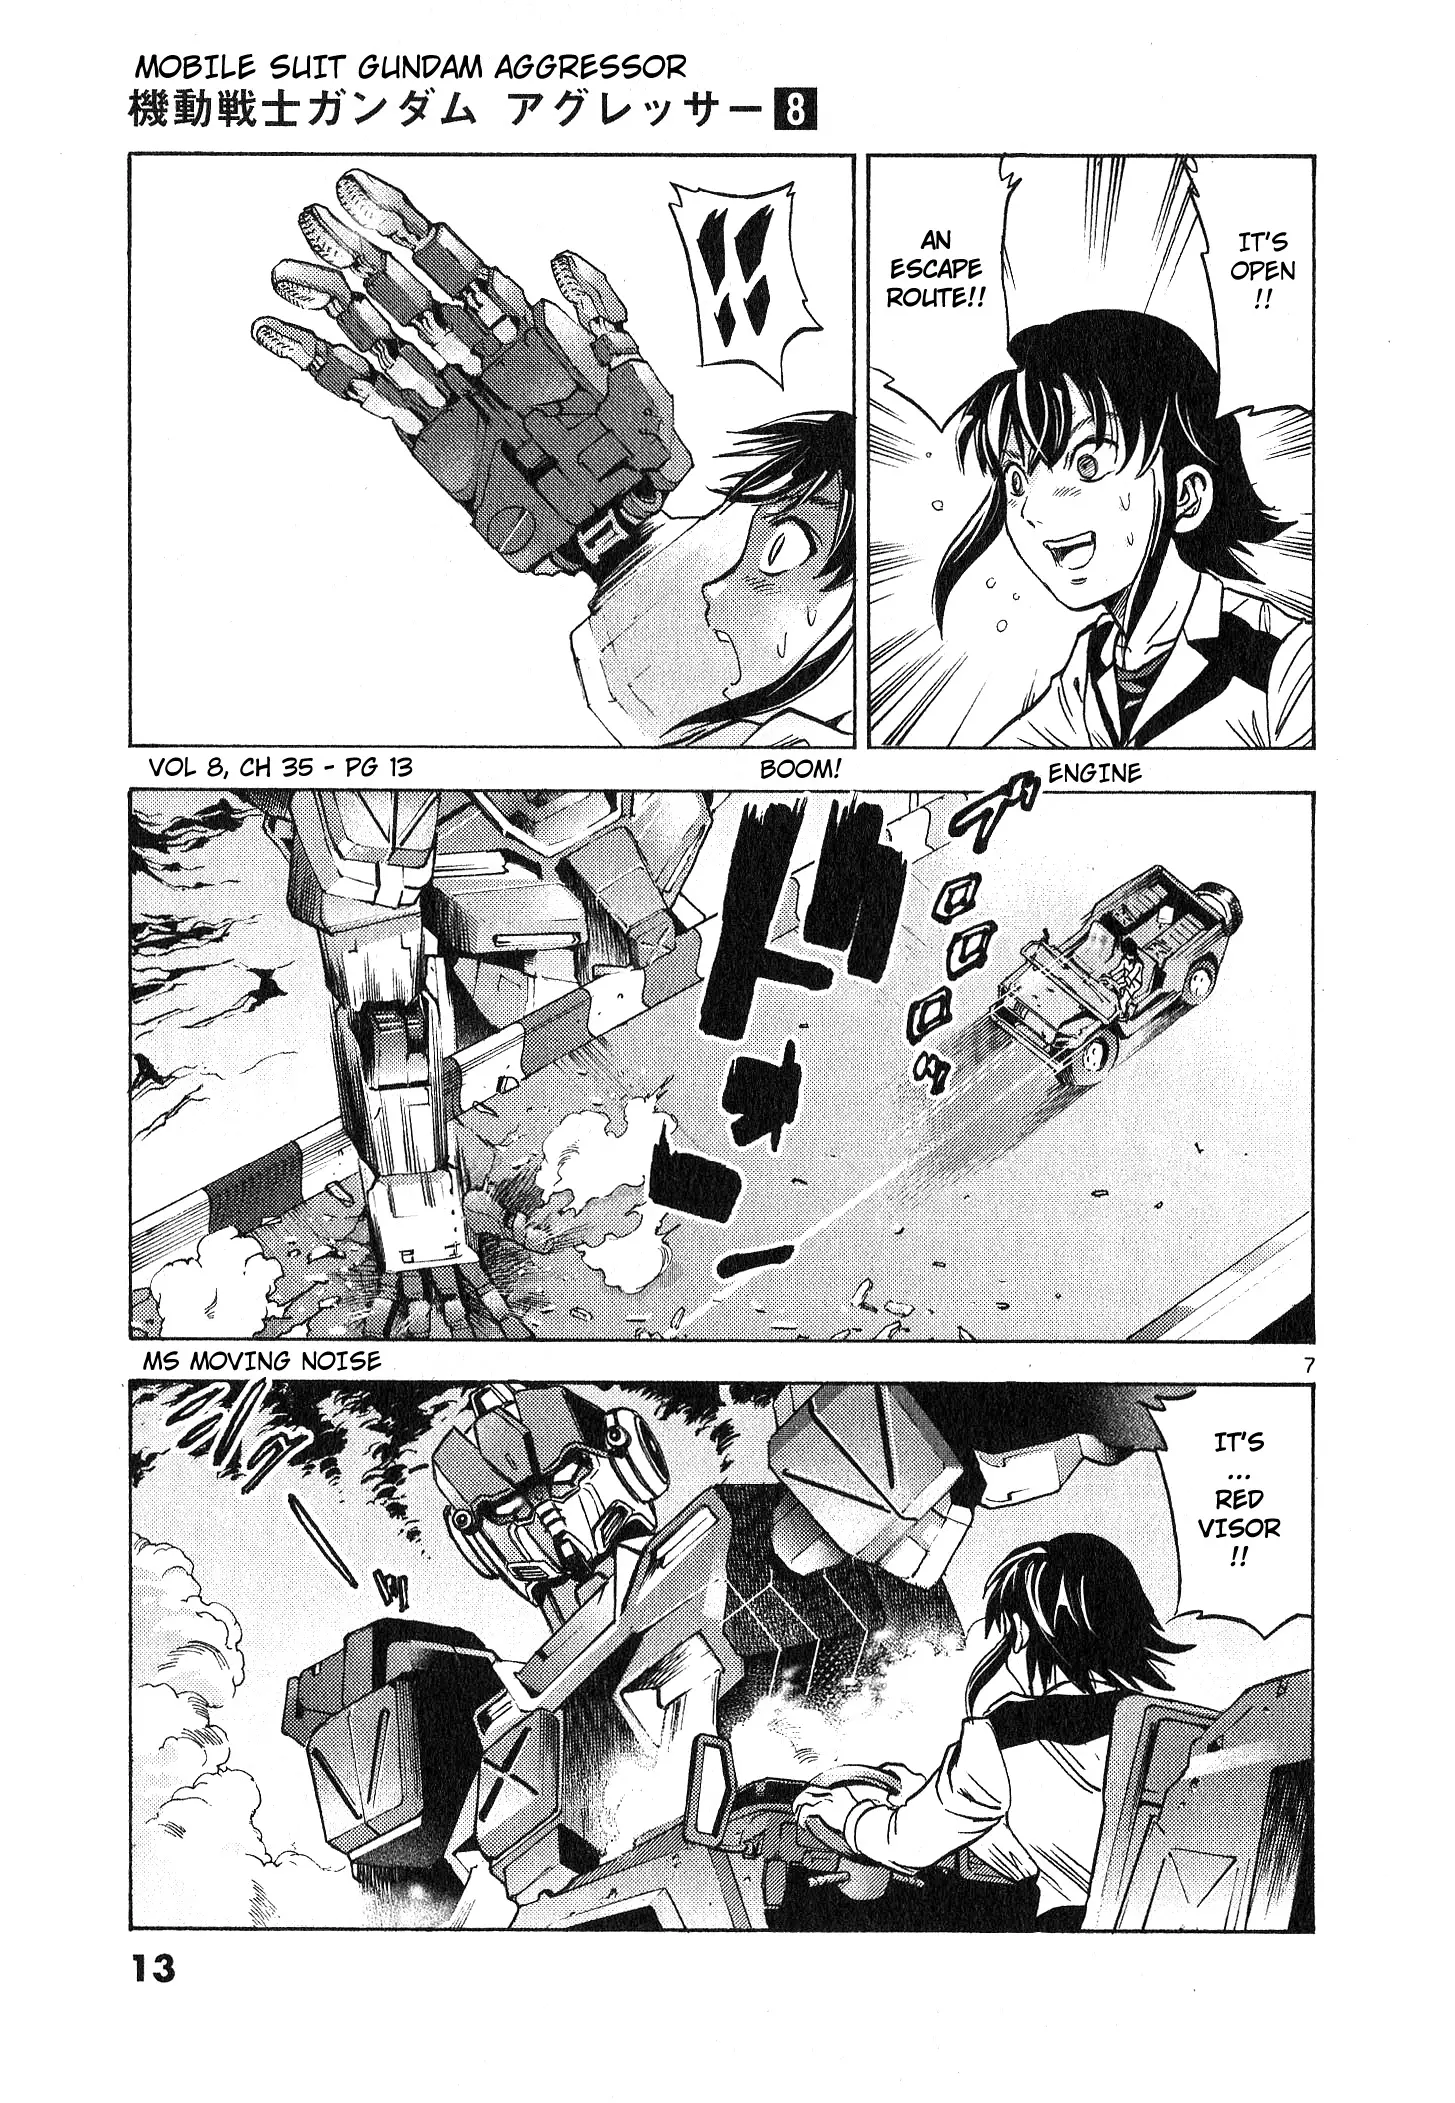 Mobile Suit Gundam Aggressor - 35 page 8-305d3026